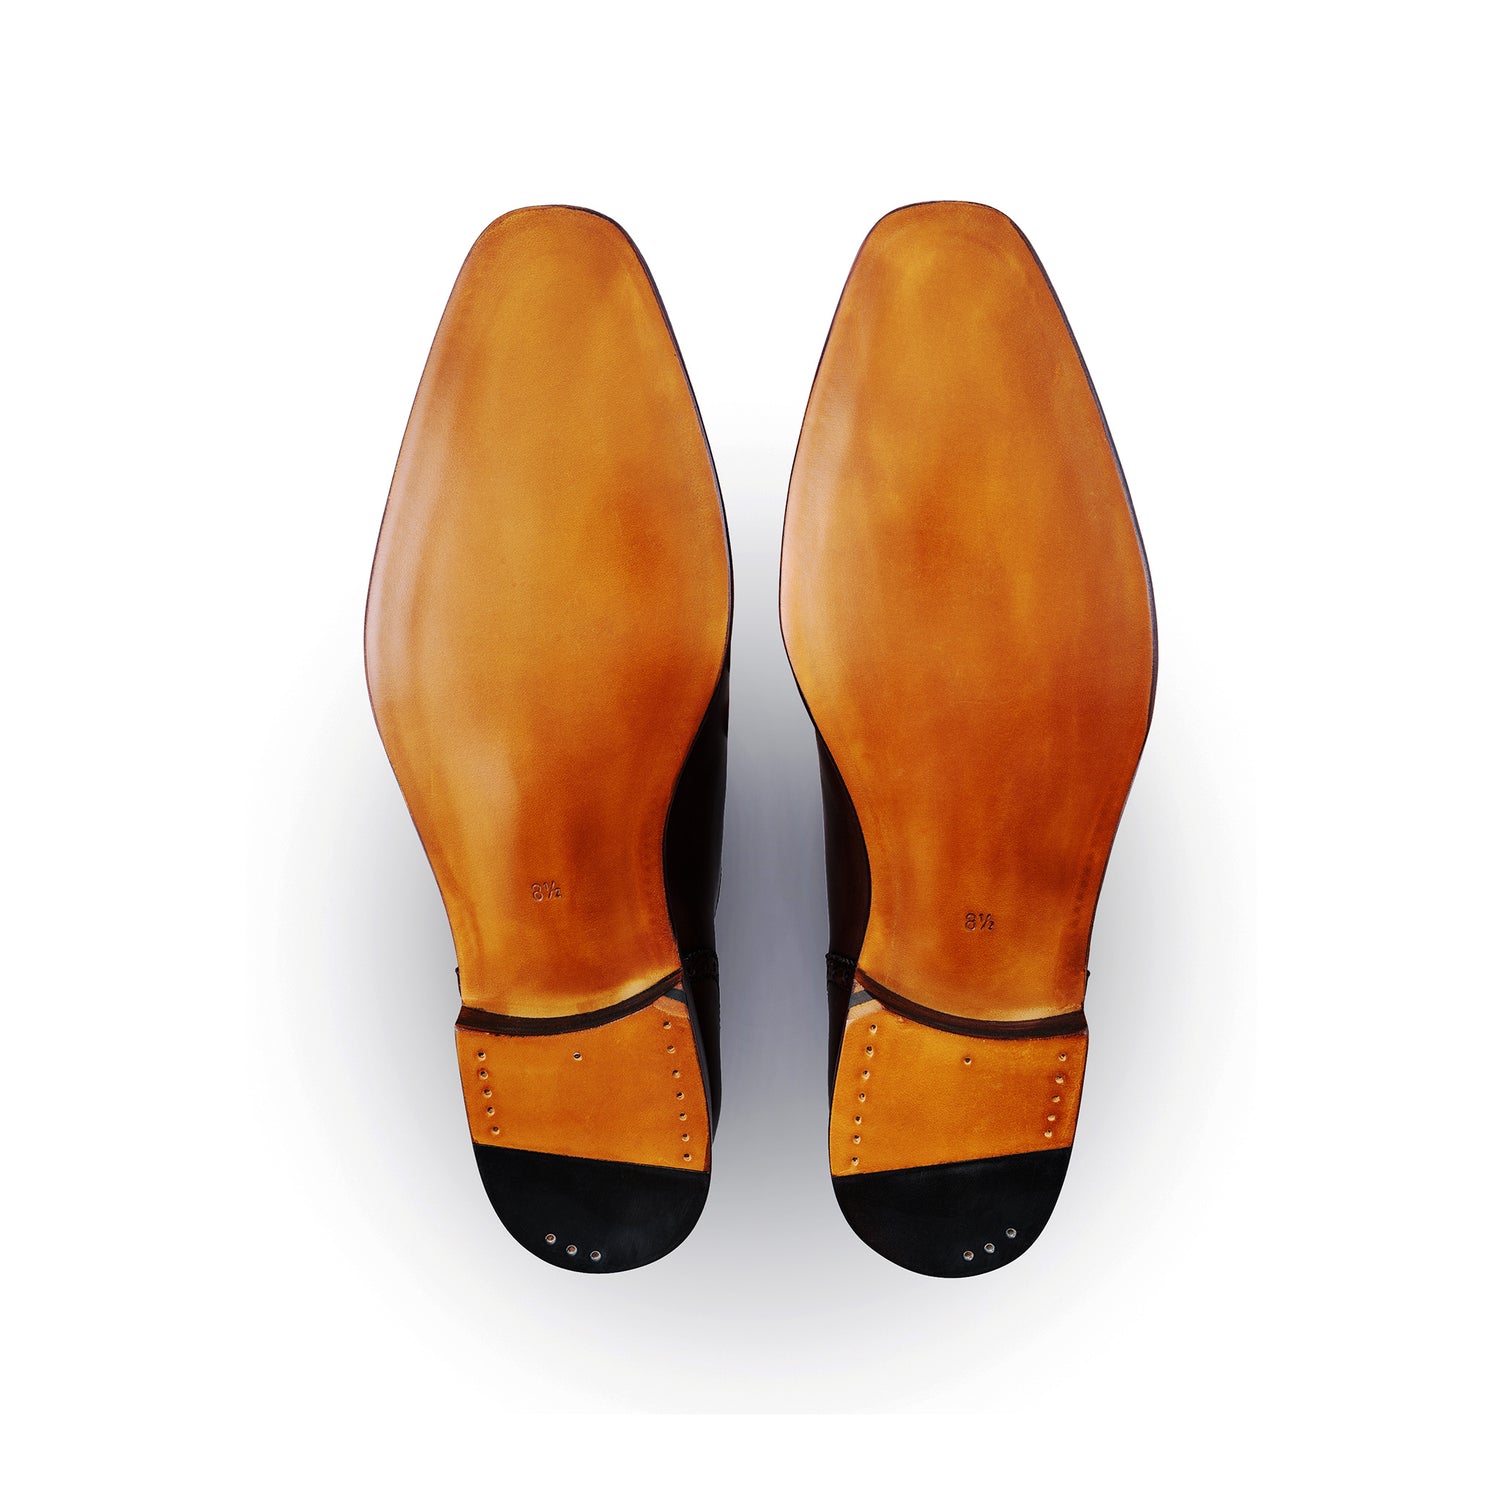 TLB Mallorca leather shoes 555 / ALAN / VEGANO DARK BROWN